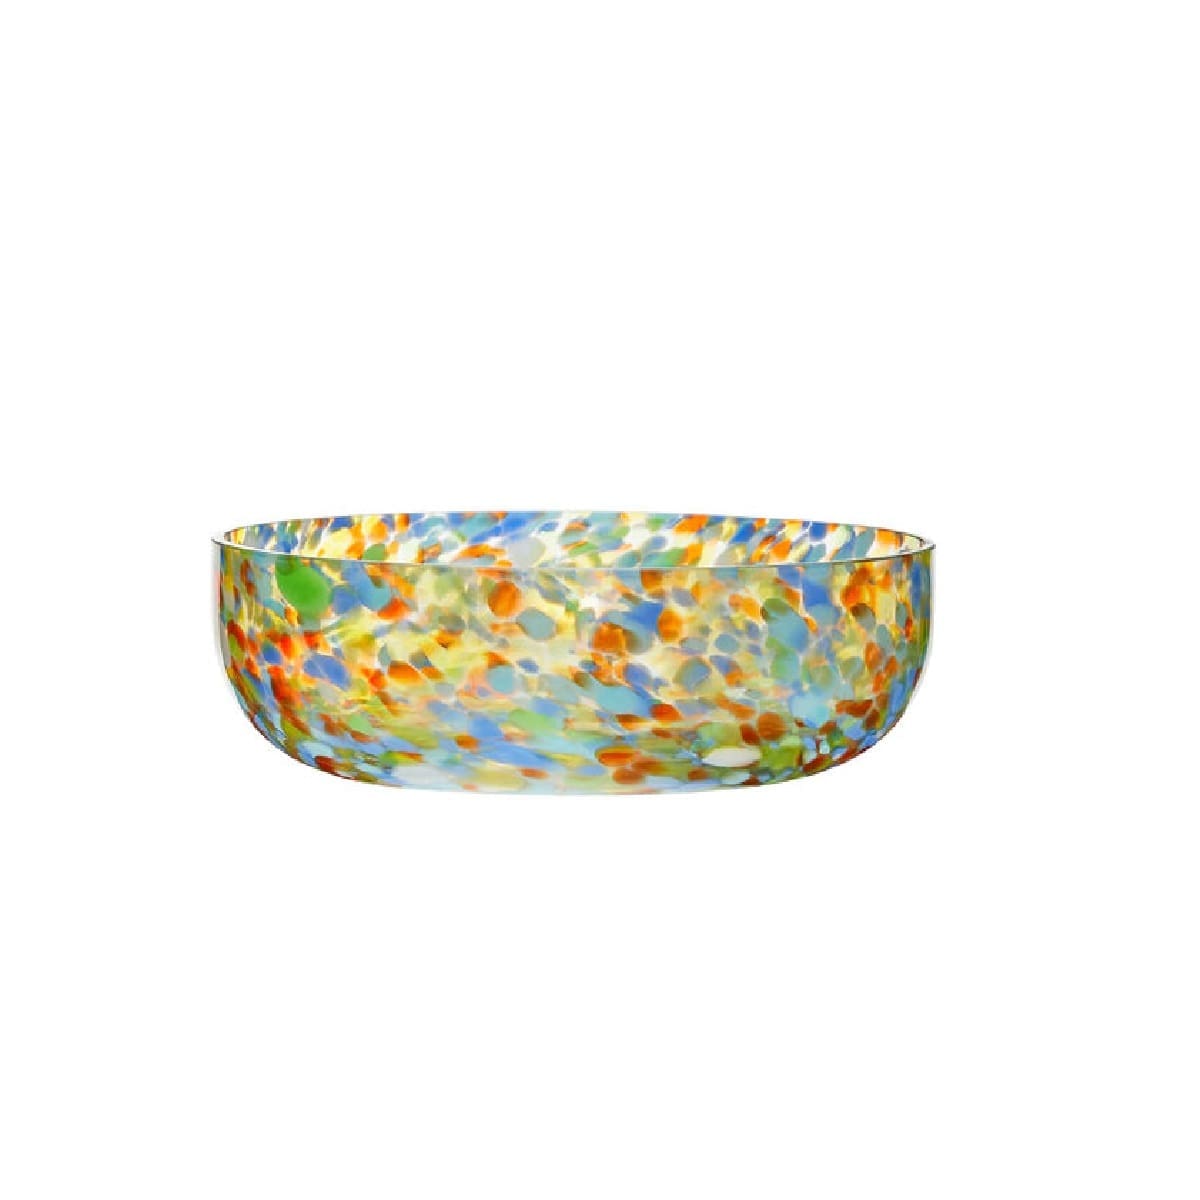 confetti-bowls-multicolour-set-of-2-9eedeb6c0c6f5c1cac93dbd03a27b60a.jpg